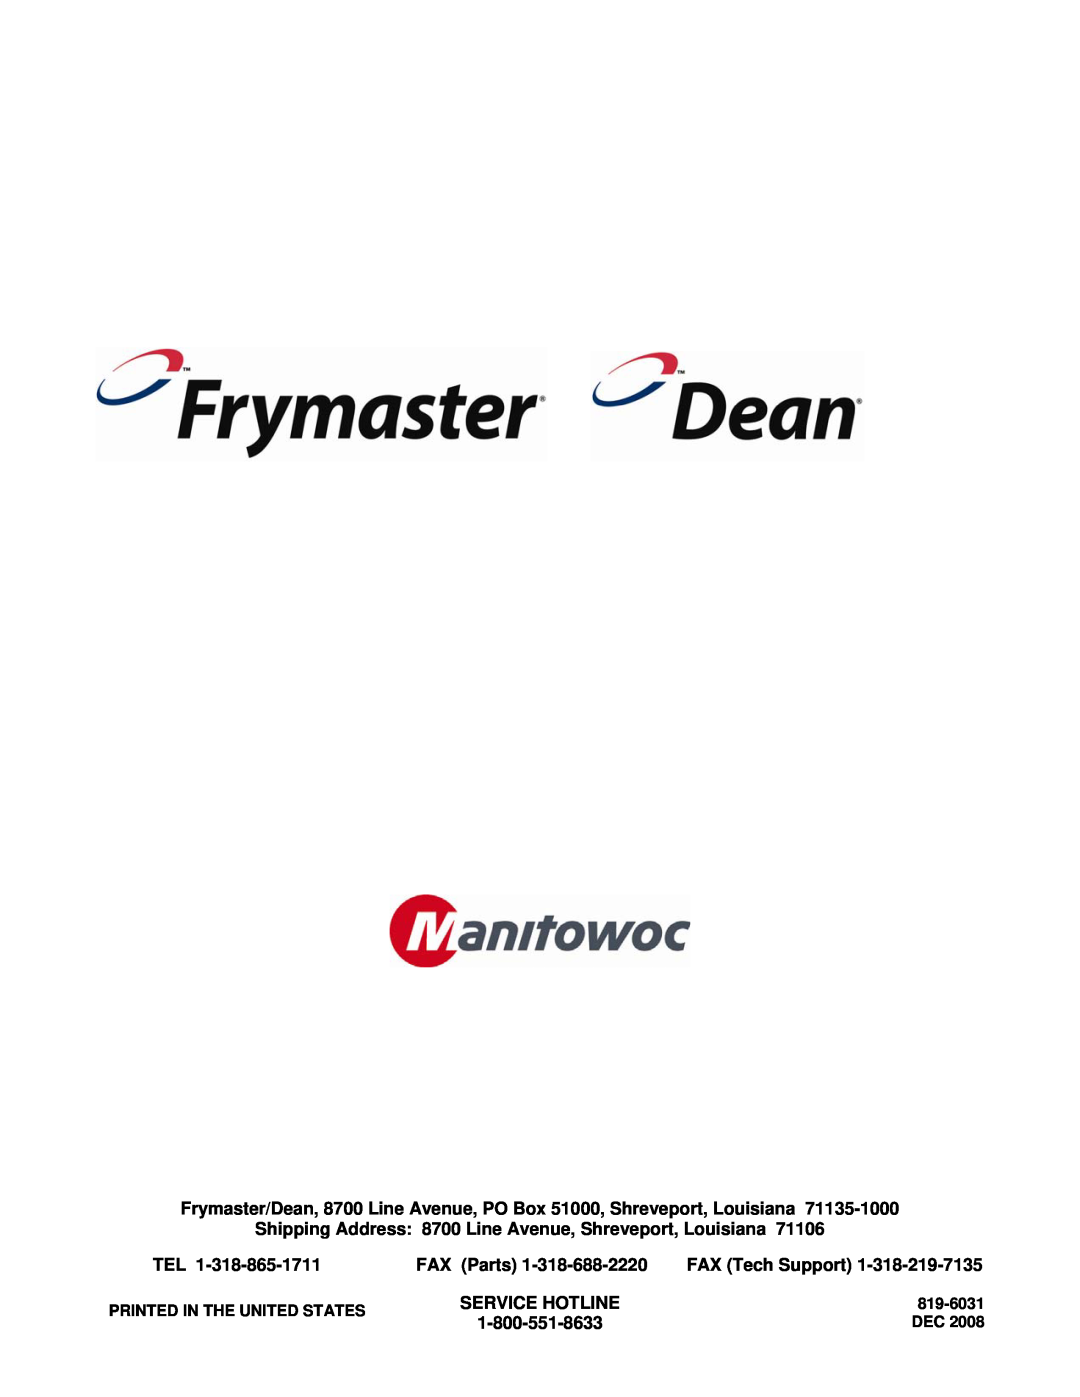 Frymaster 1824/2424G Frymaster/Dean, 8700 Line Avenue, PO Box 51000, Shreveport, Louisiana, FAX Parts, FAX Tech Support 